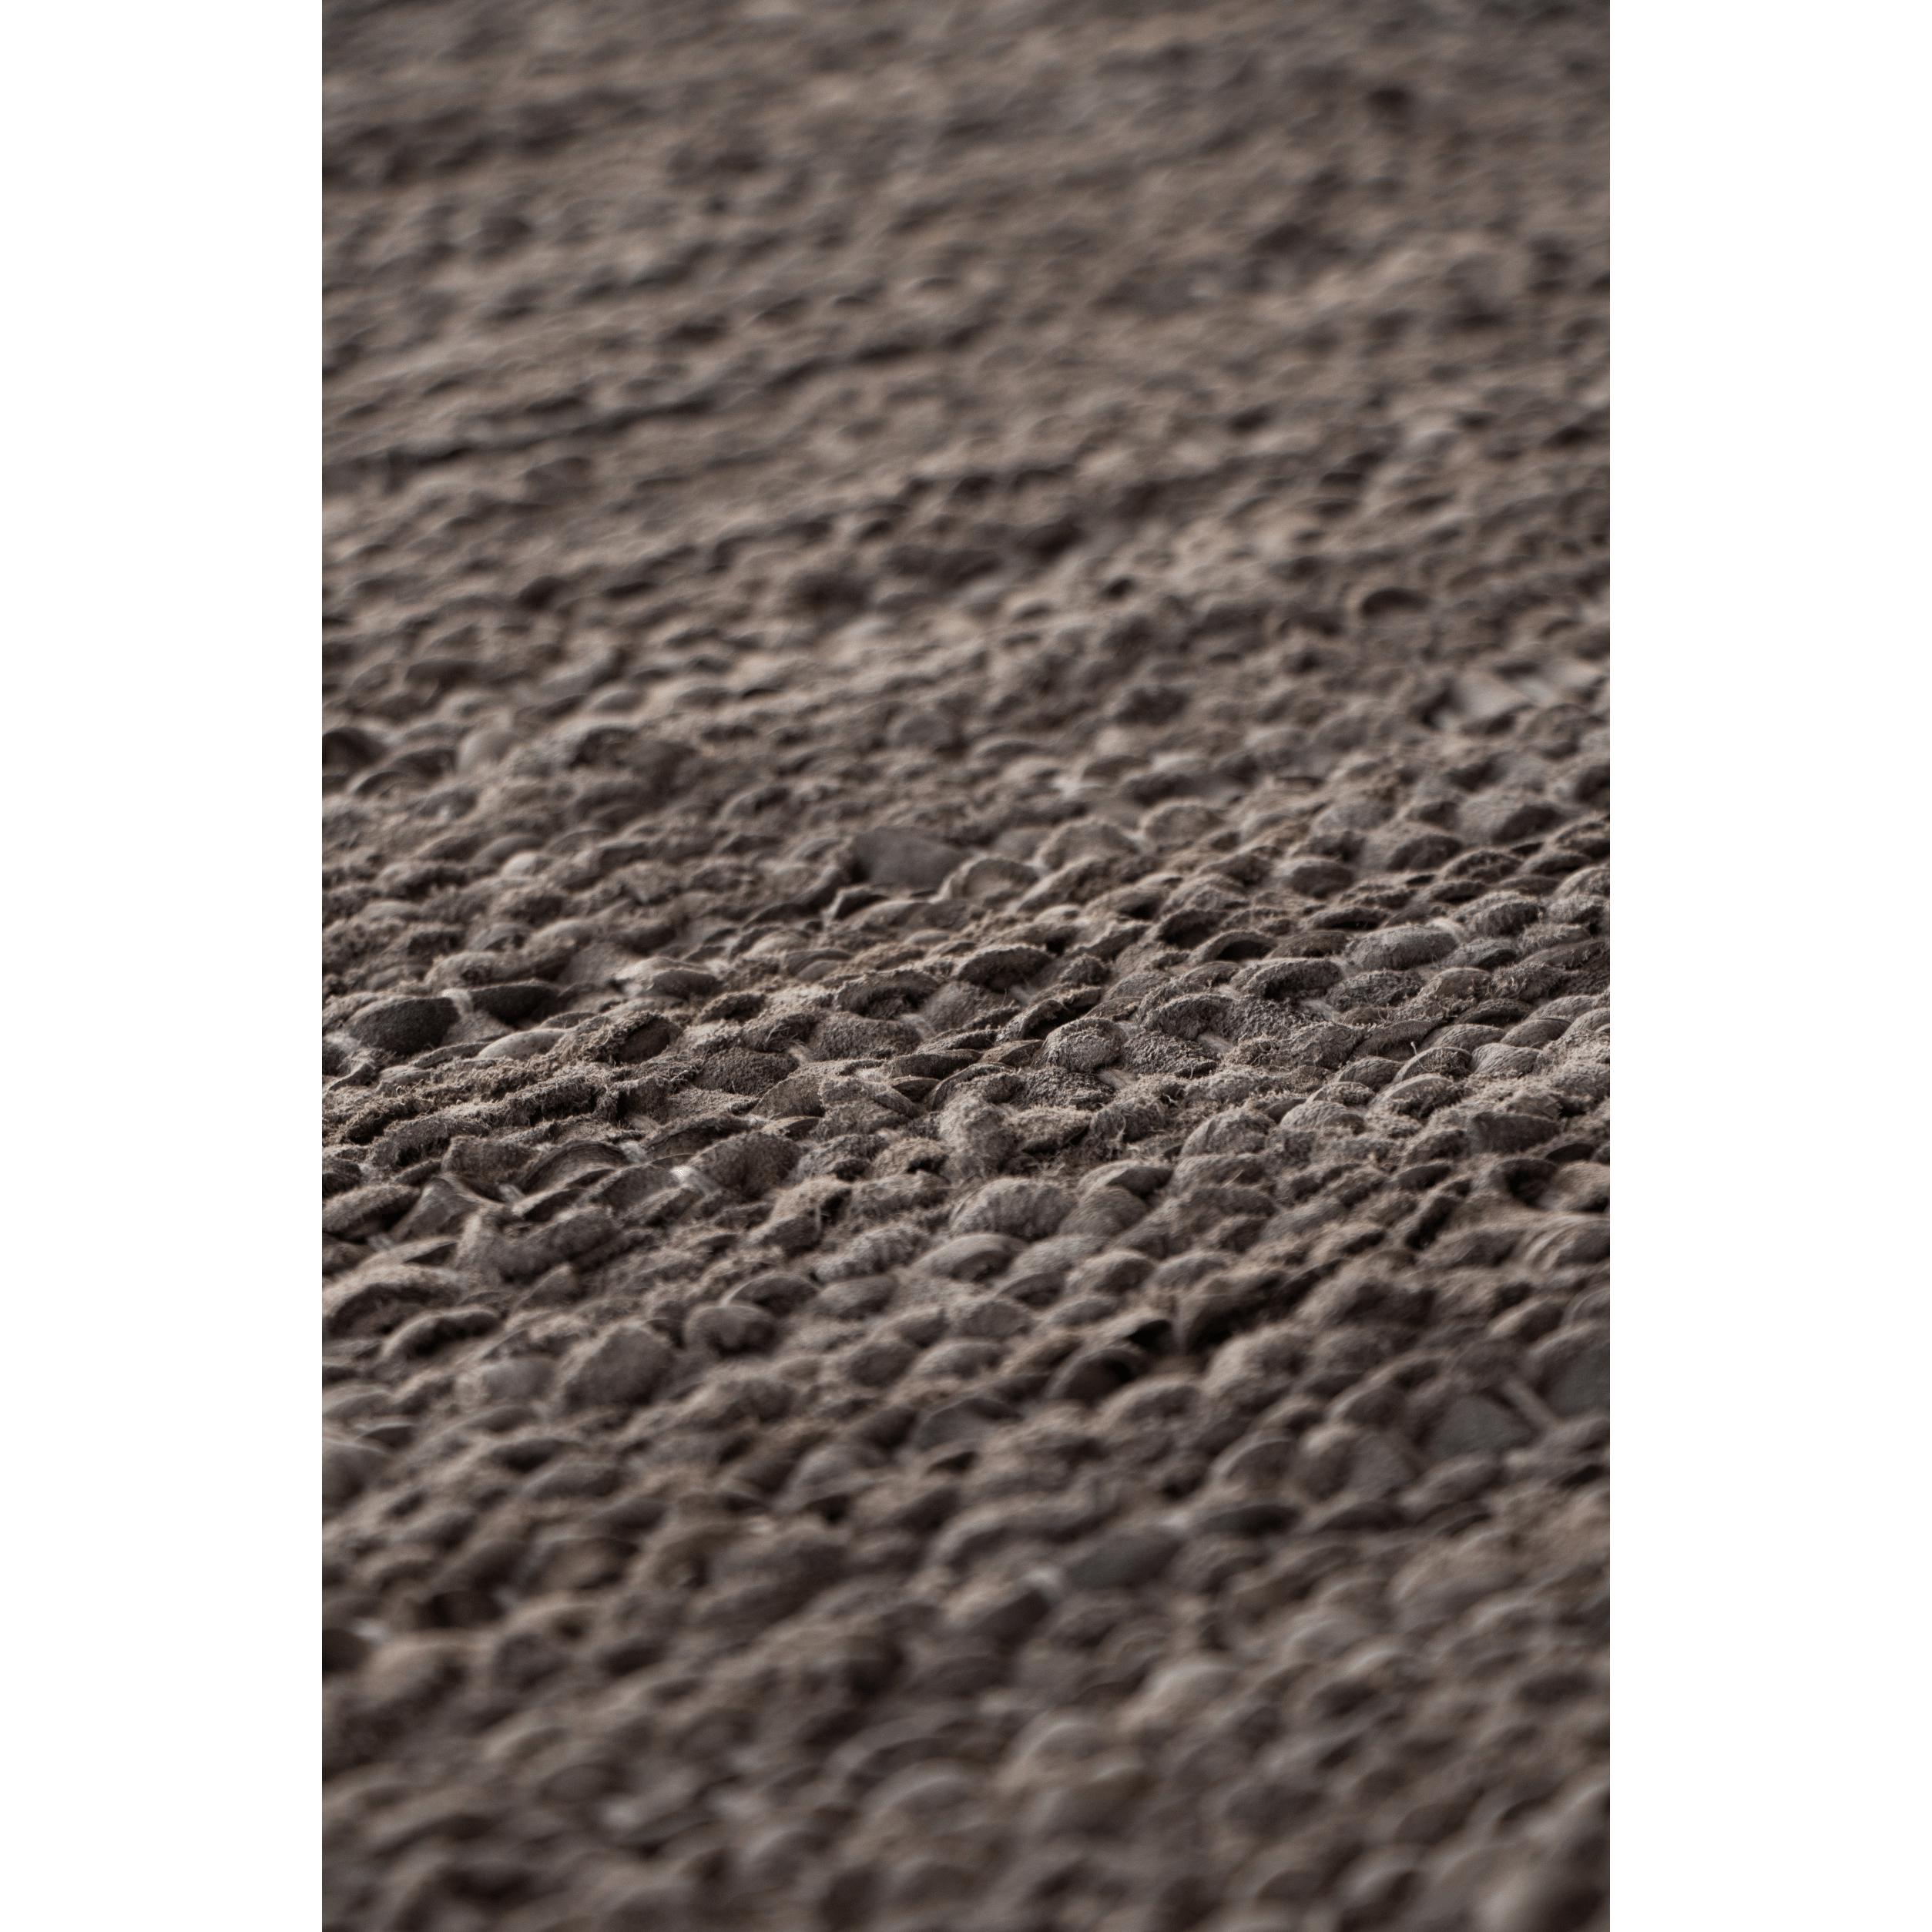 Rug Solid Leather Carpet Wood, 170 X 240 Cm